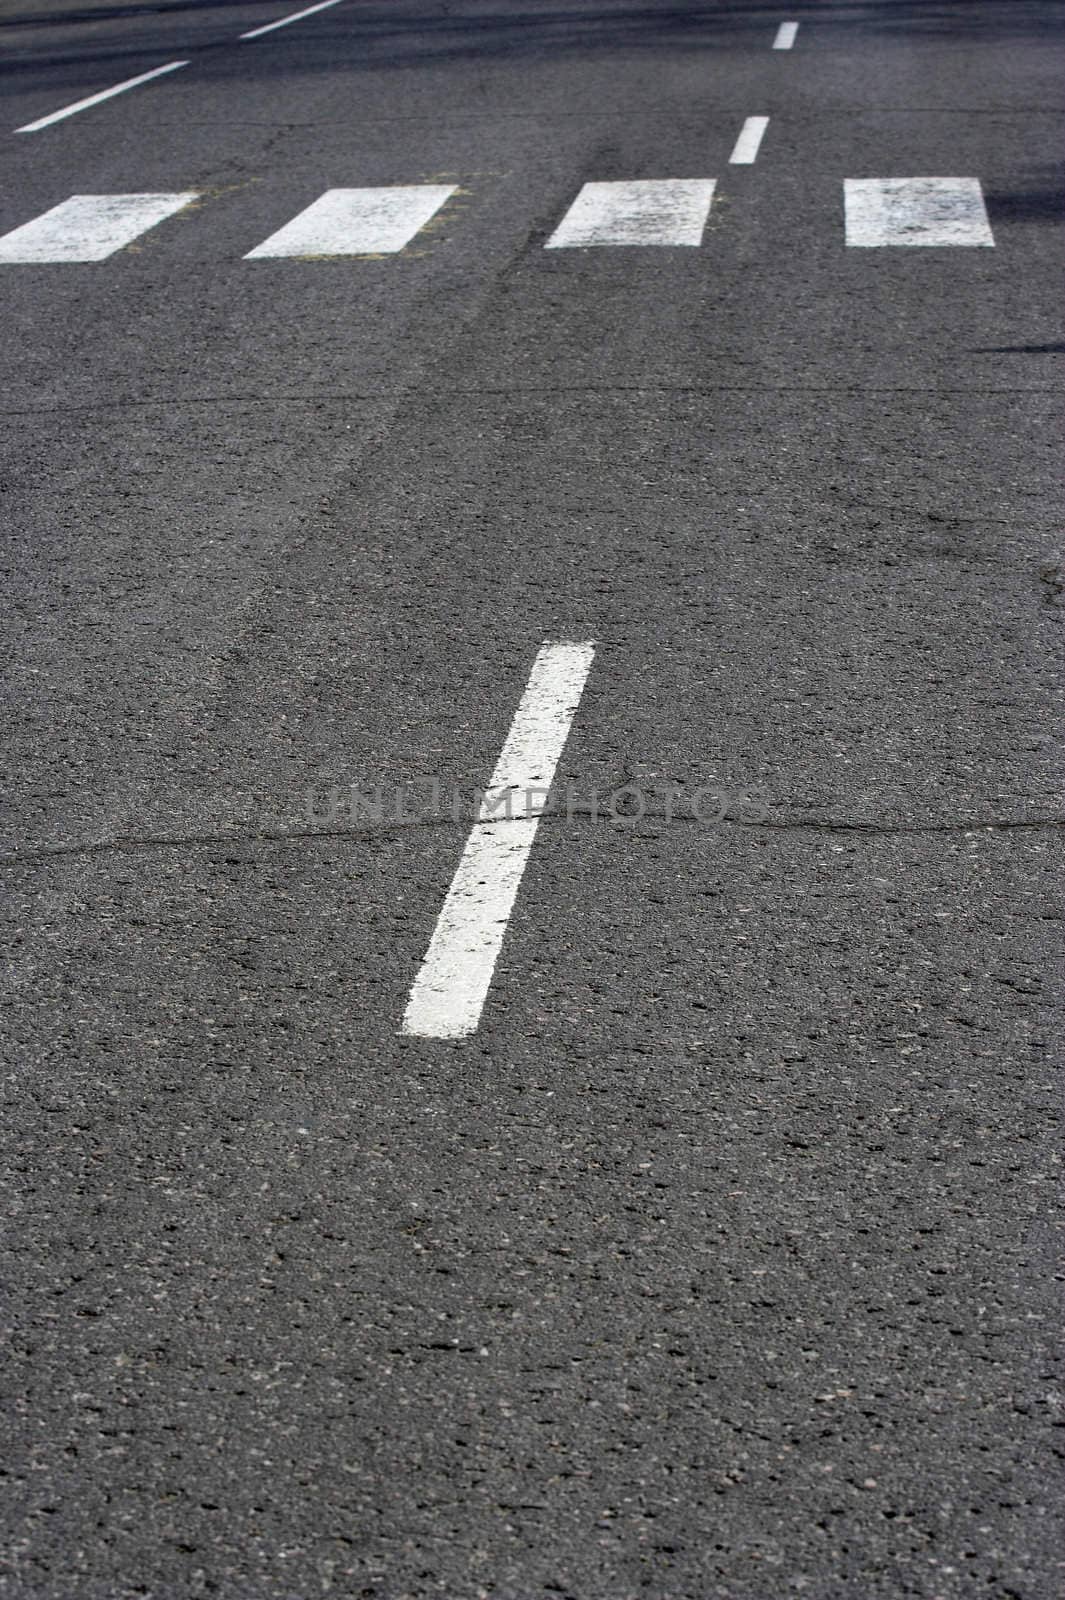  road marks  by alexkosev